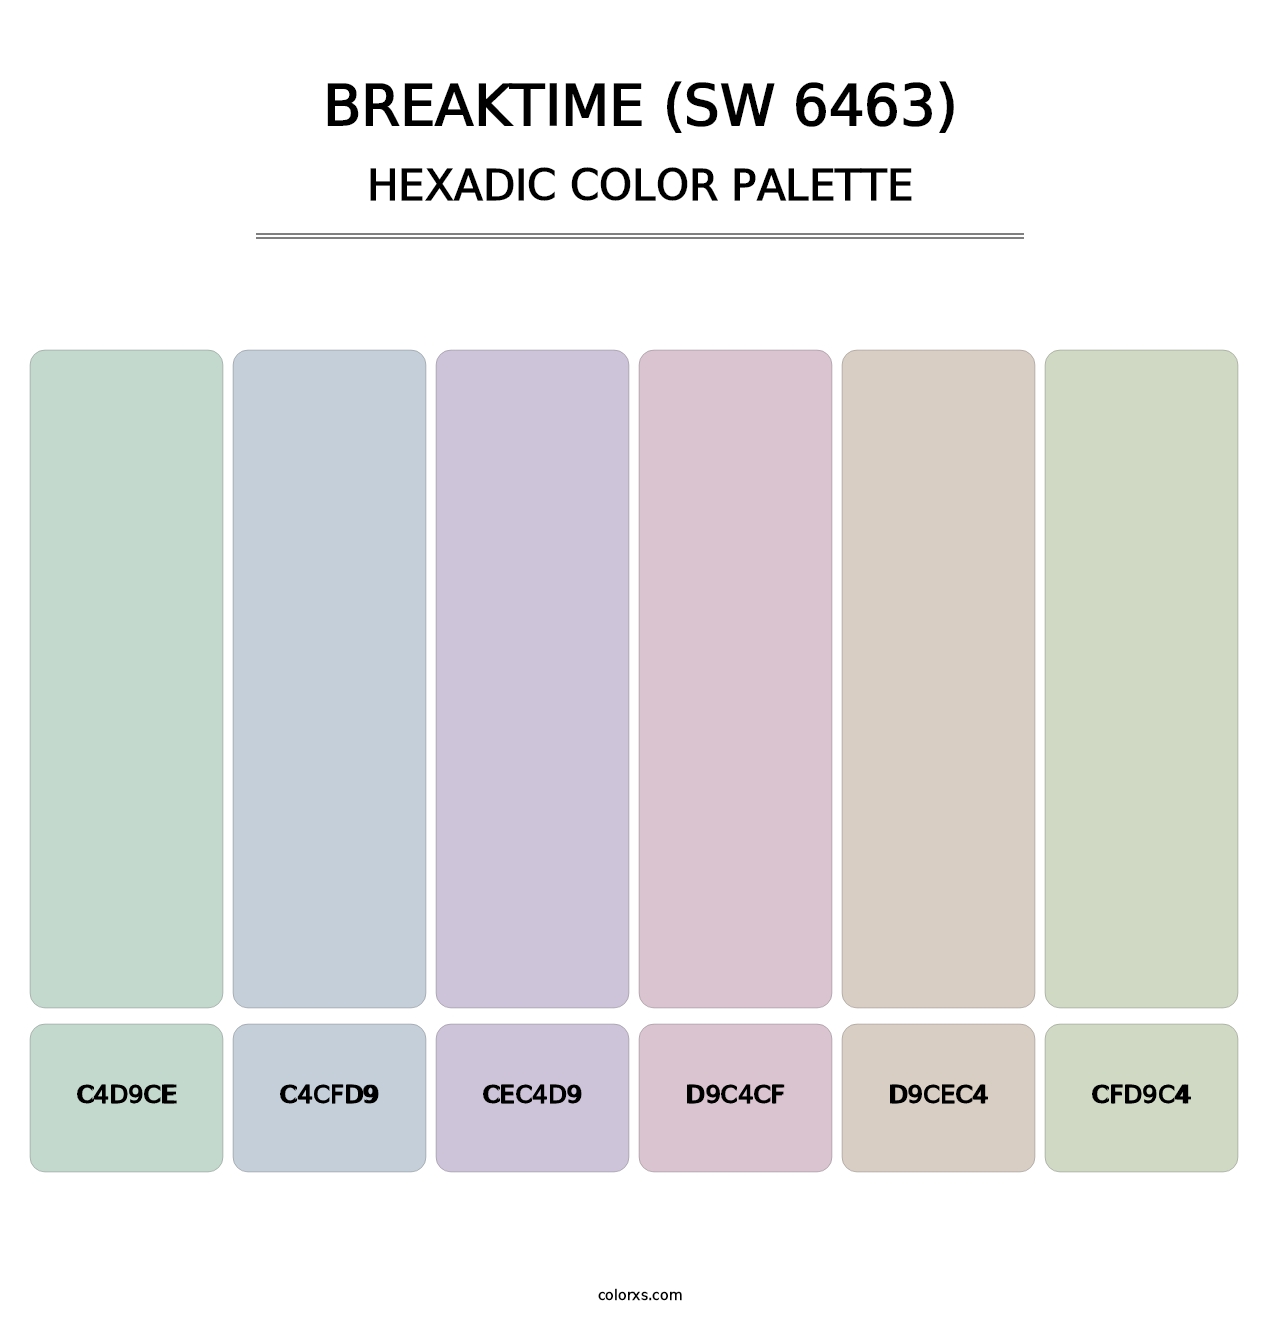 Breaktime (SW 6463) - Hexadic Color Palette